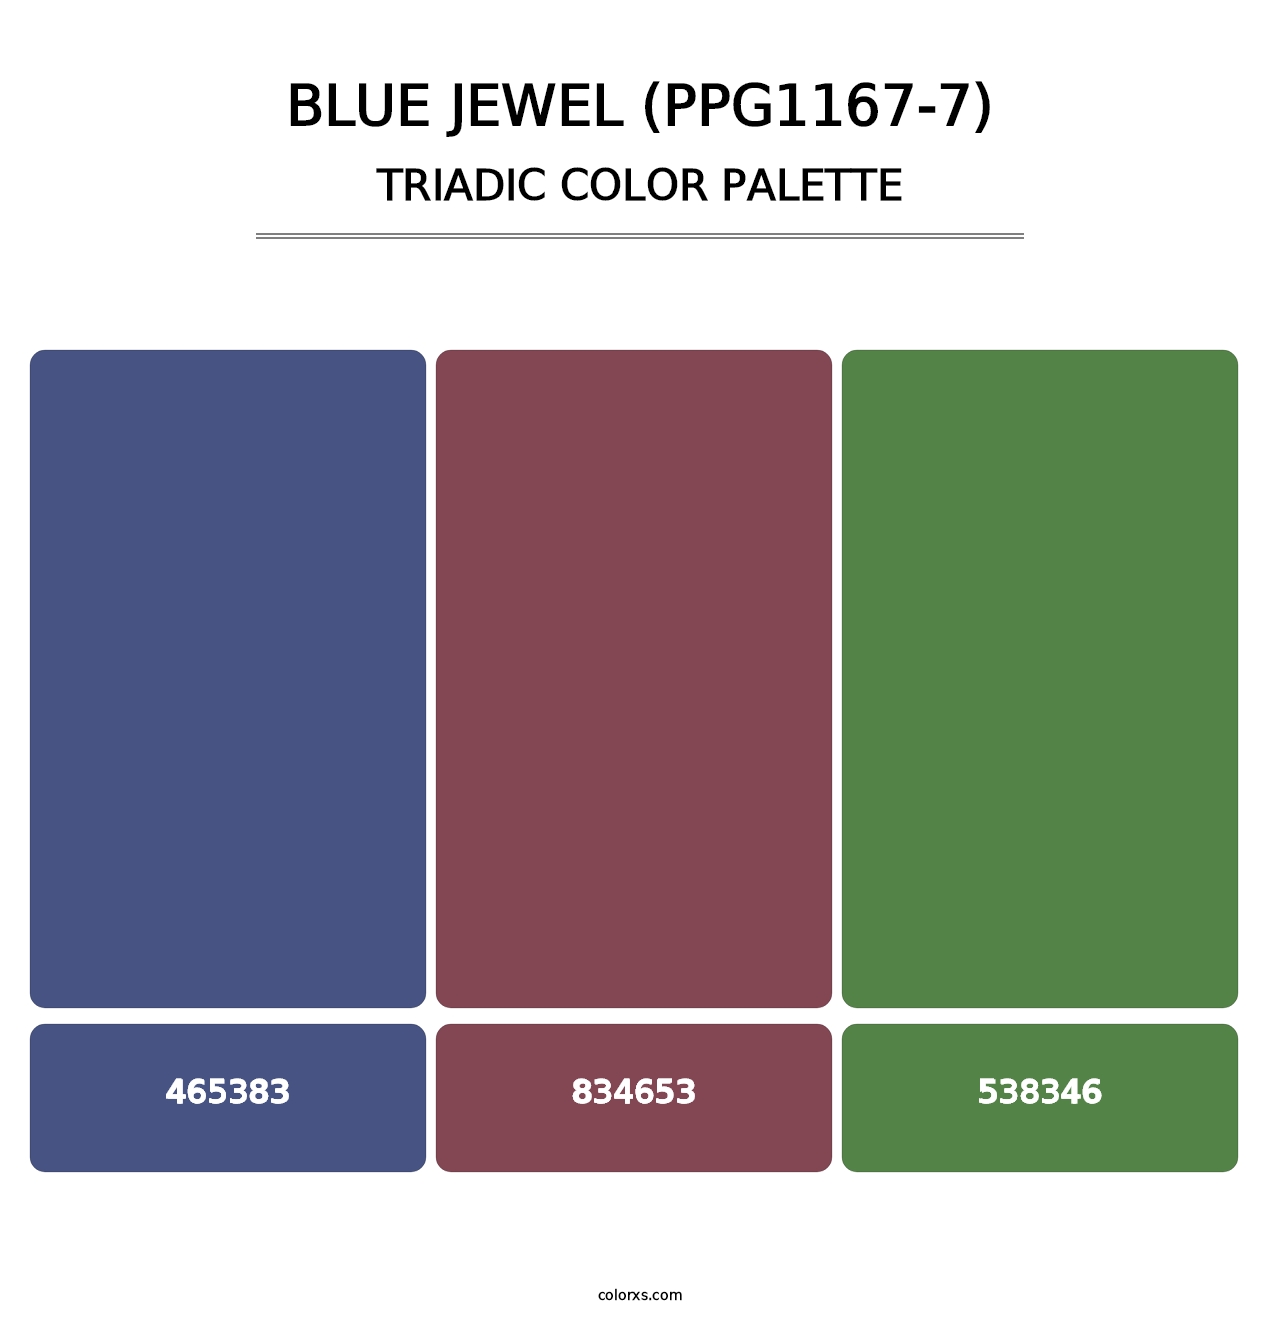 Blue Jewel (PPG1167-7) - Triadic Color Palette